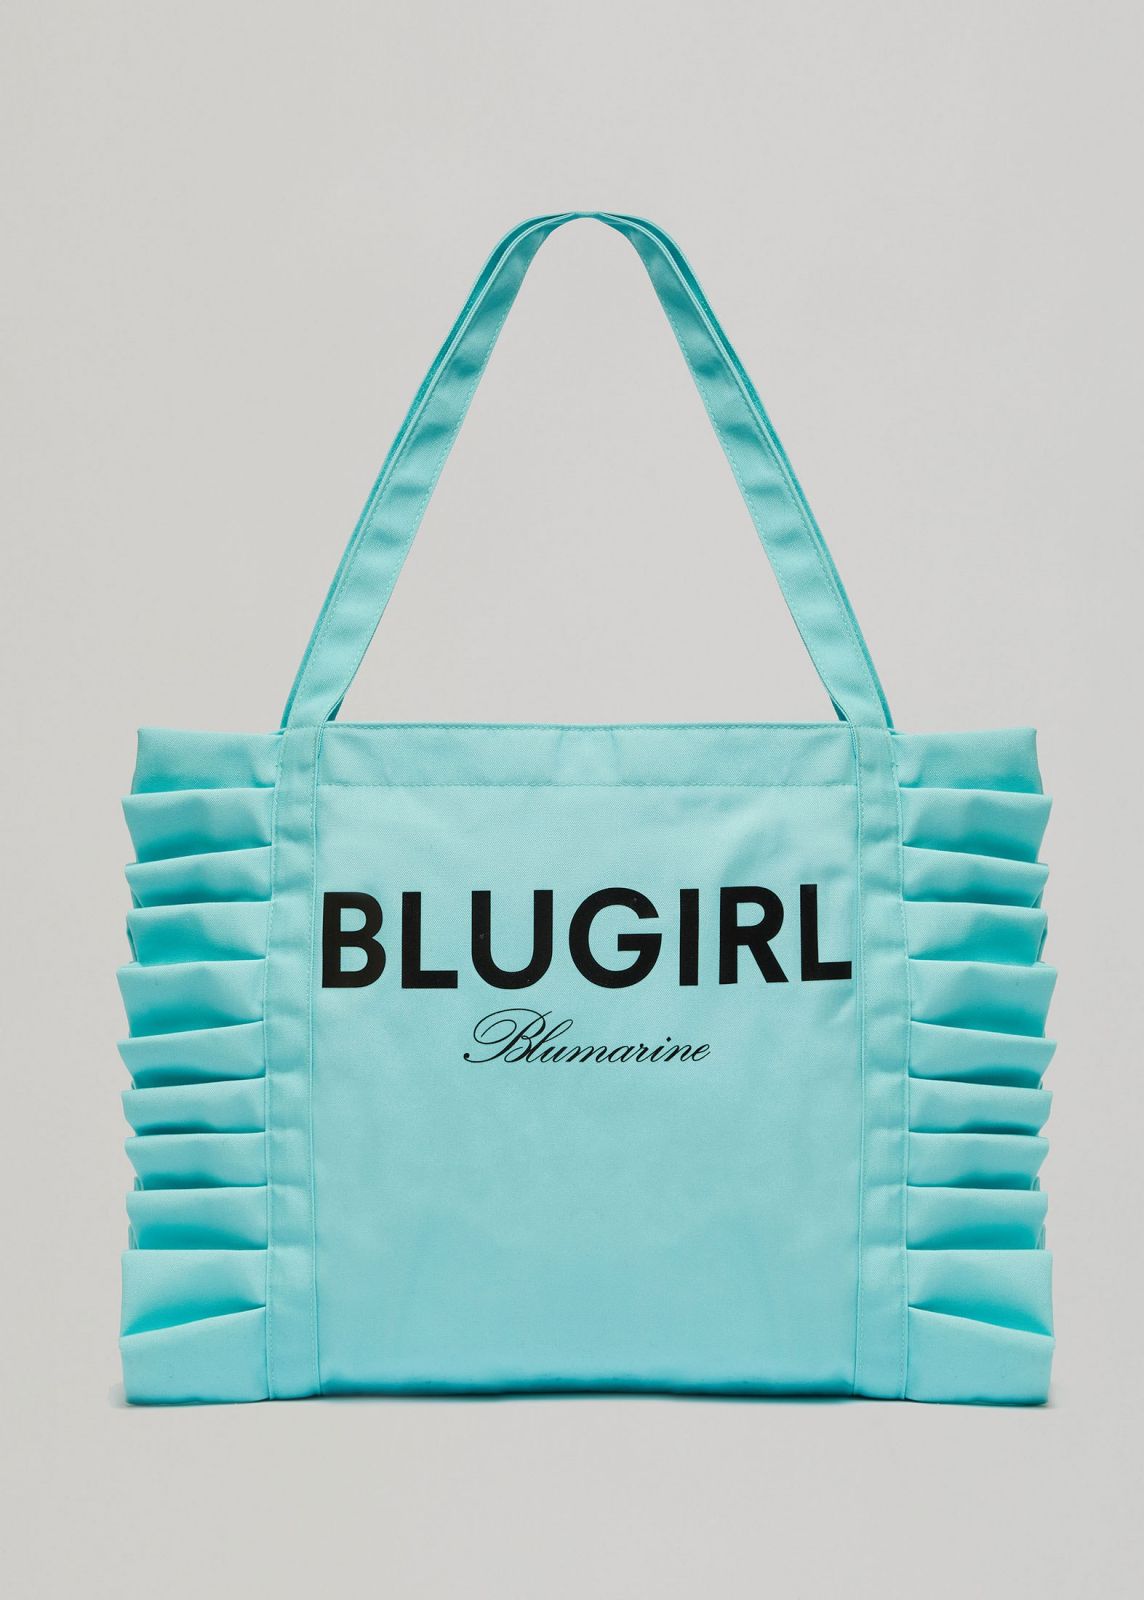 Blugirl bag with ruffles